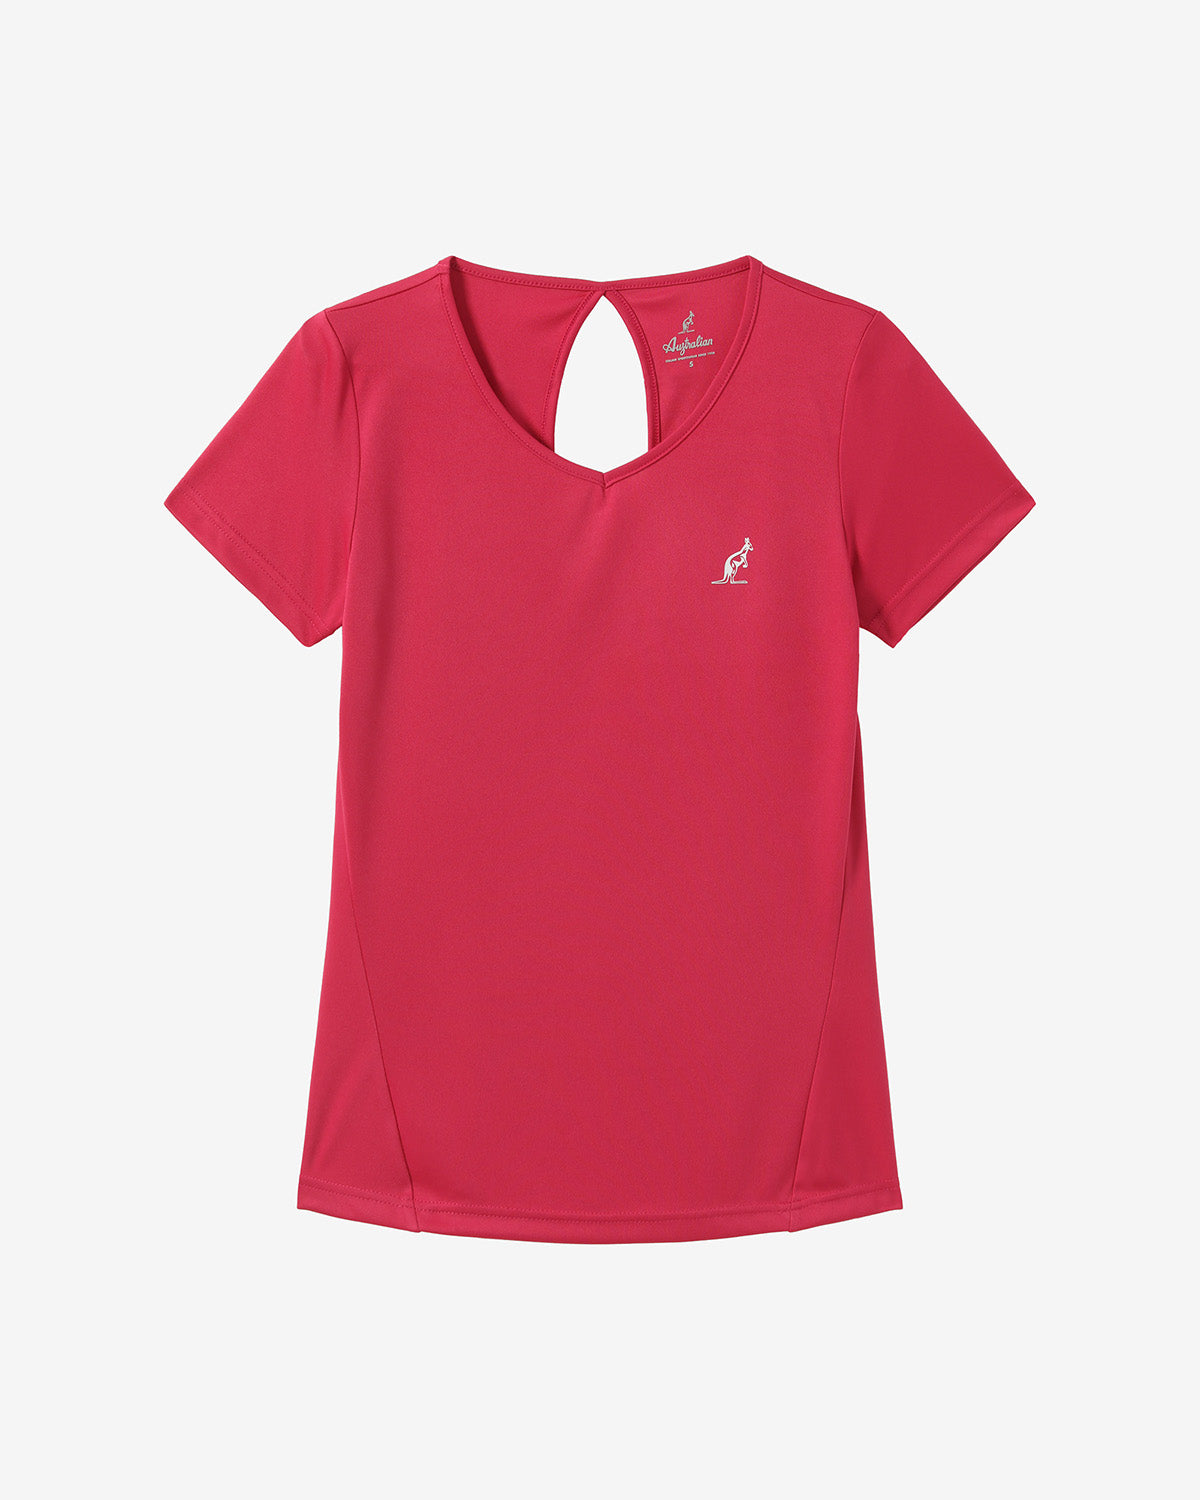 Drop T-Shirt: Asutralian Tennis